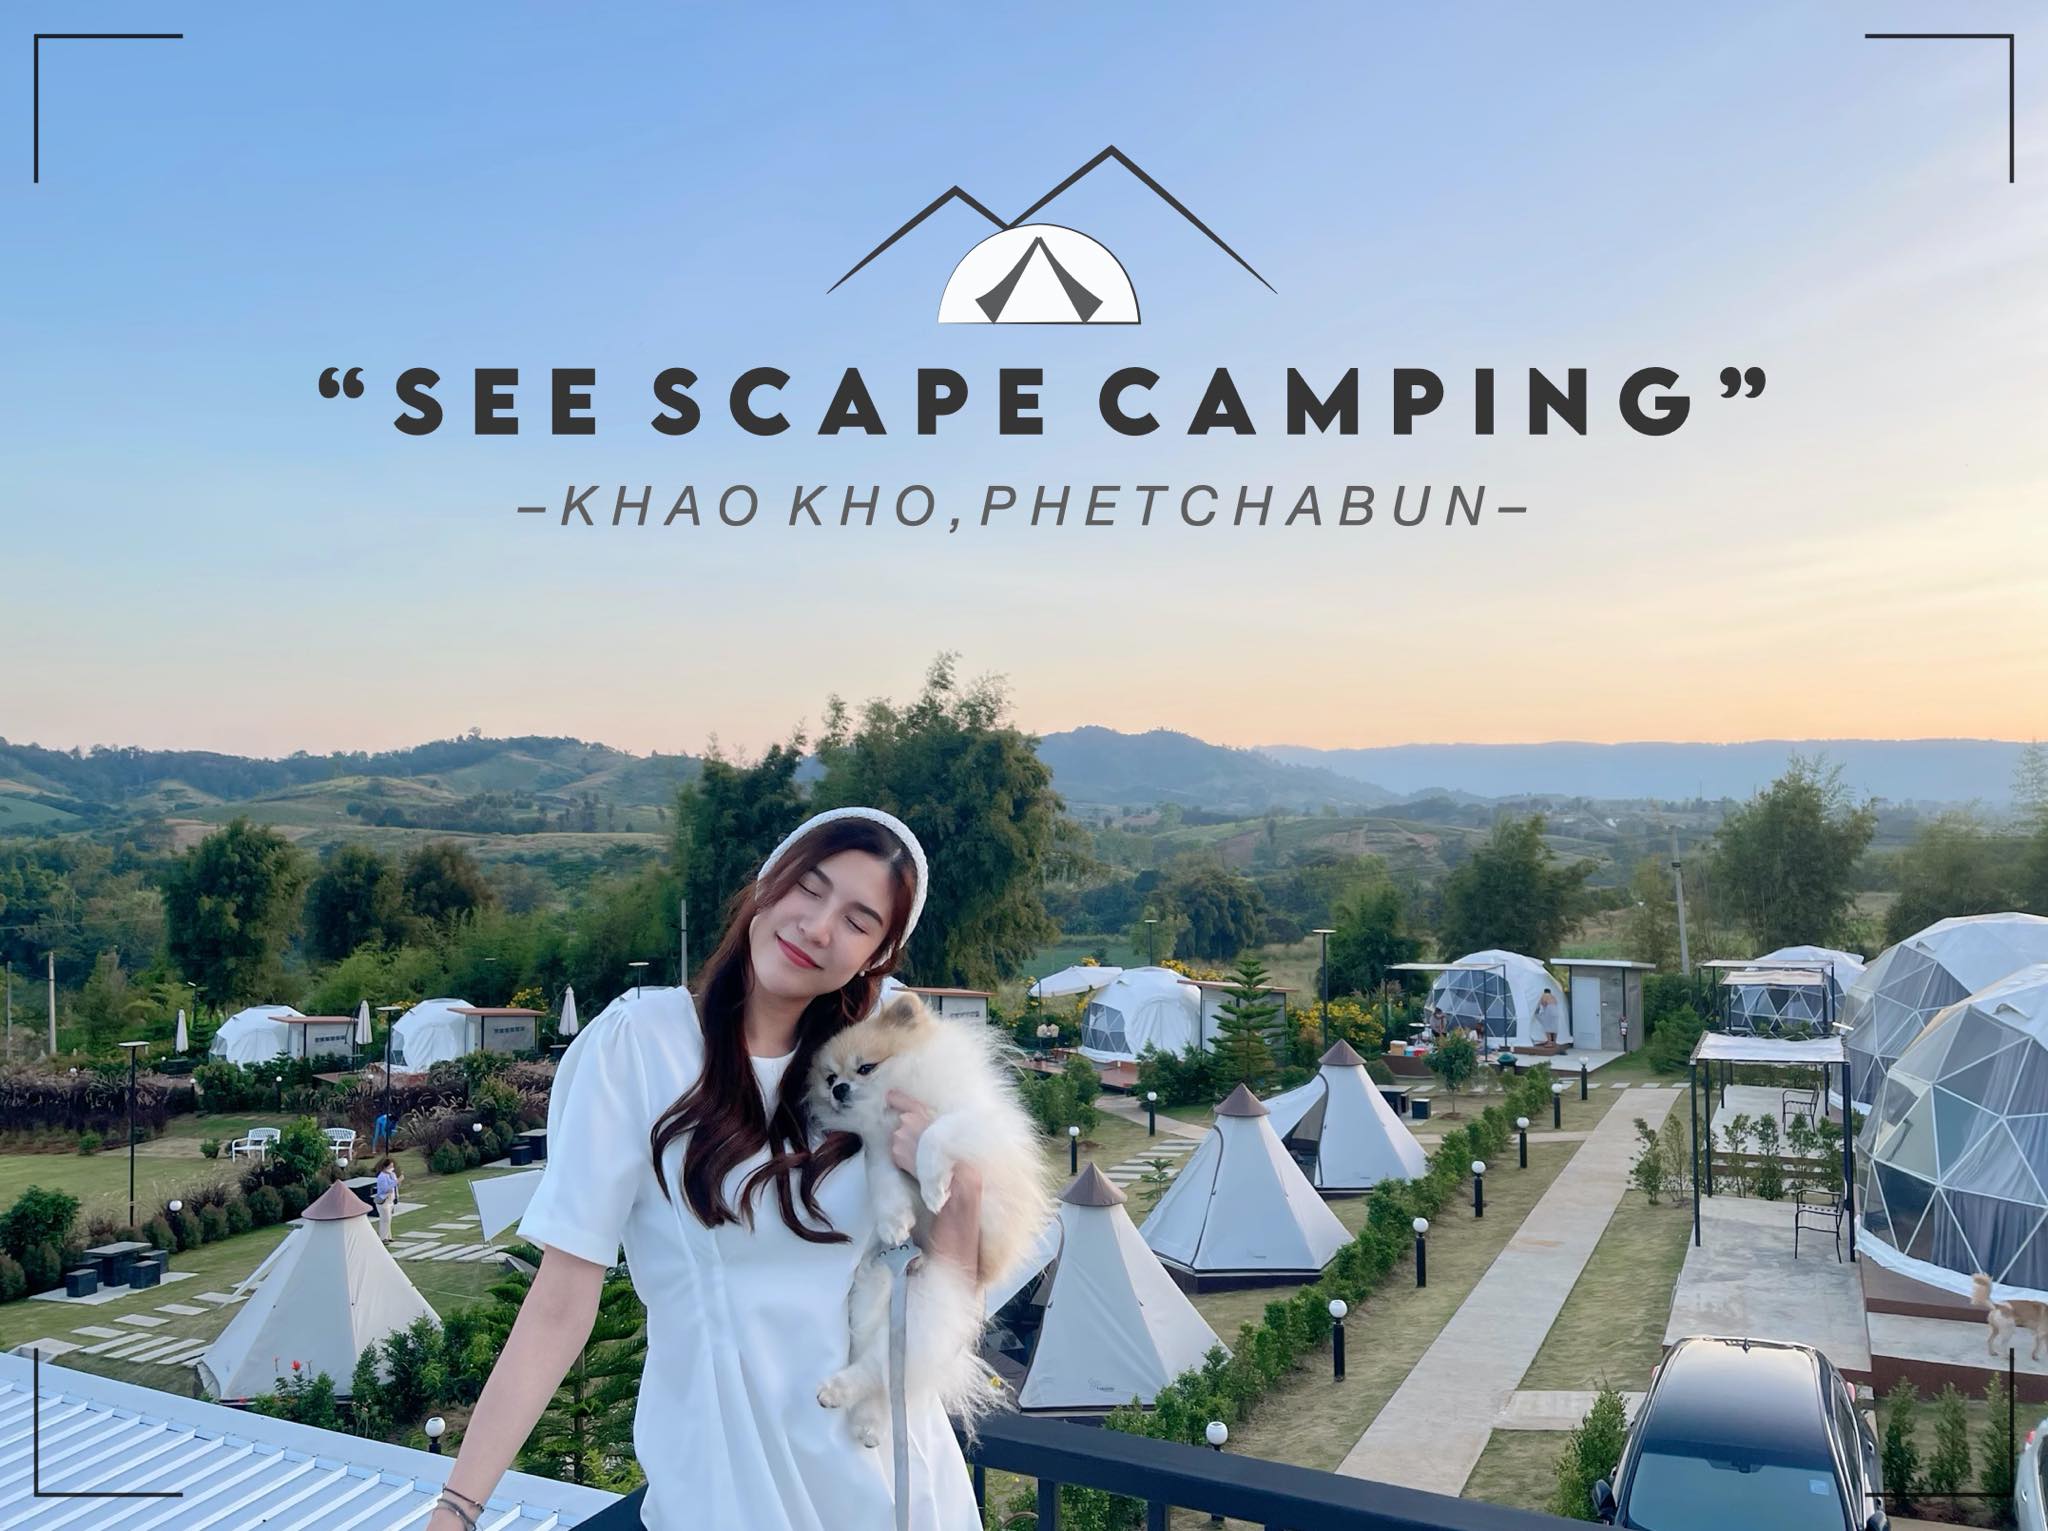 See Scape Camping Khaokho ที่พักเขาค้อ สุนัขพักได้ สูดอากาศธรรมชาติ ท่ามกลางหุบเขา